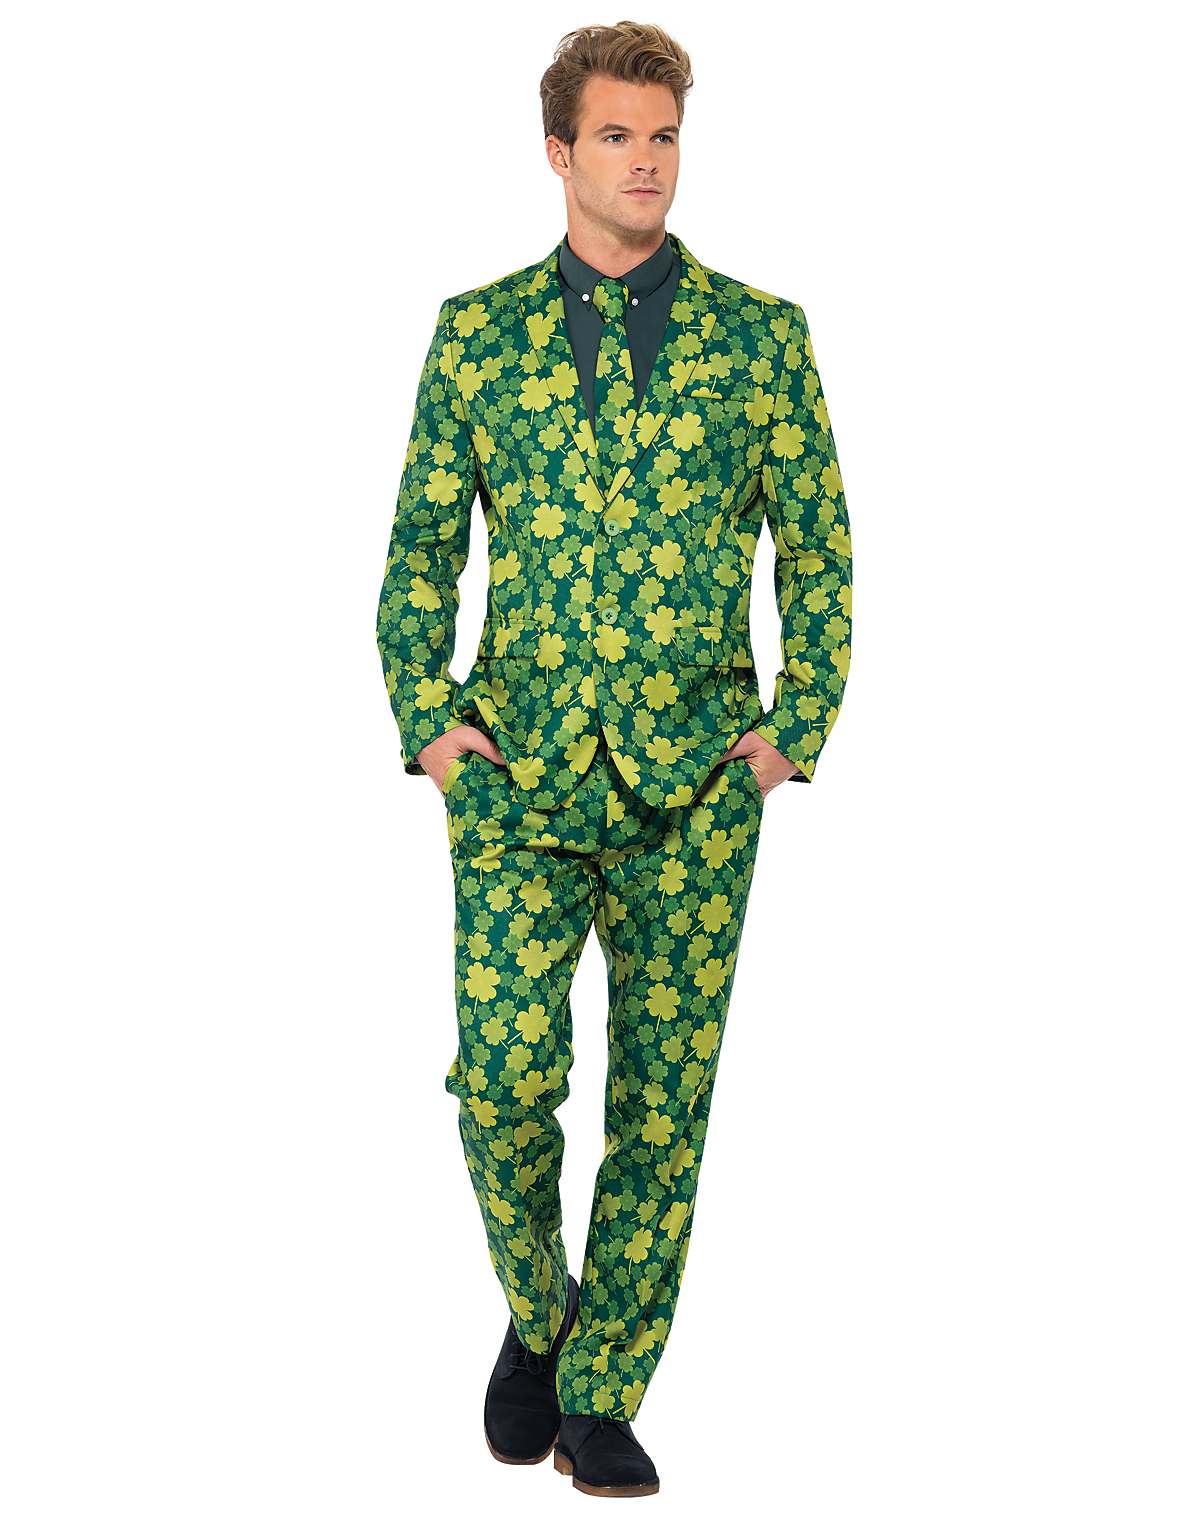 St. Patrick's Day Clover Suit